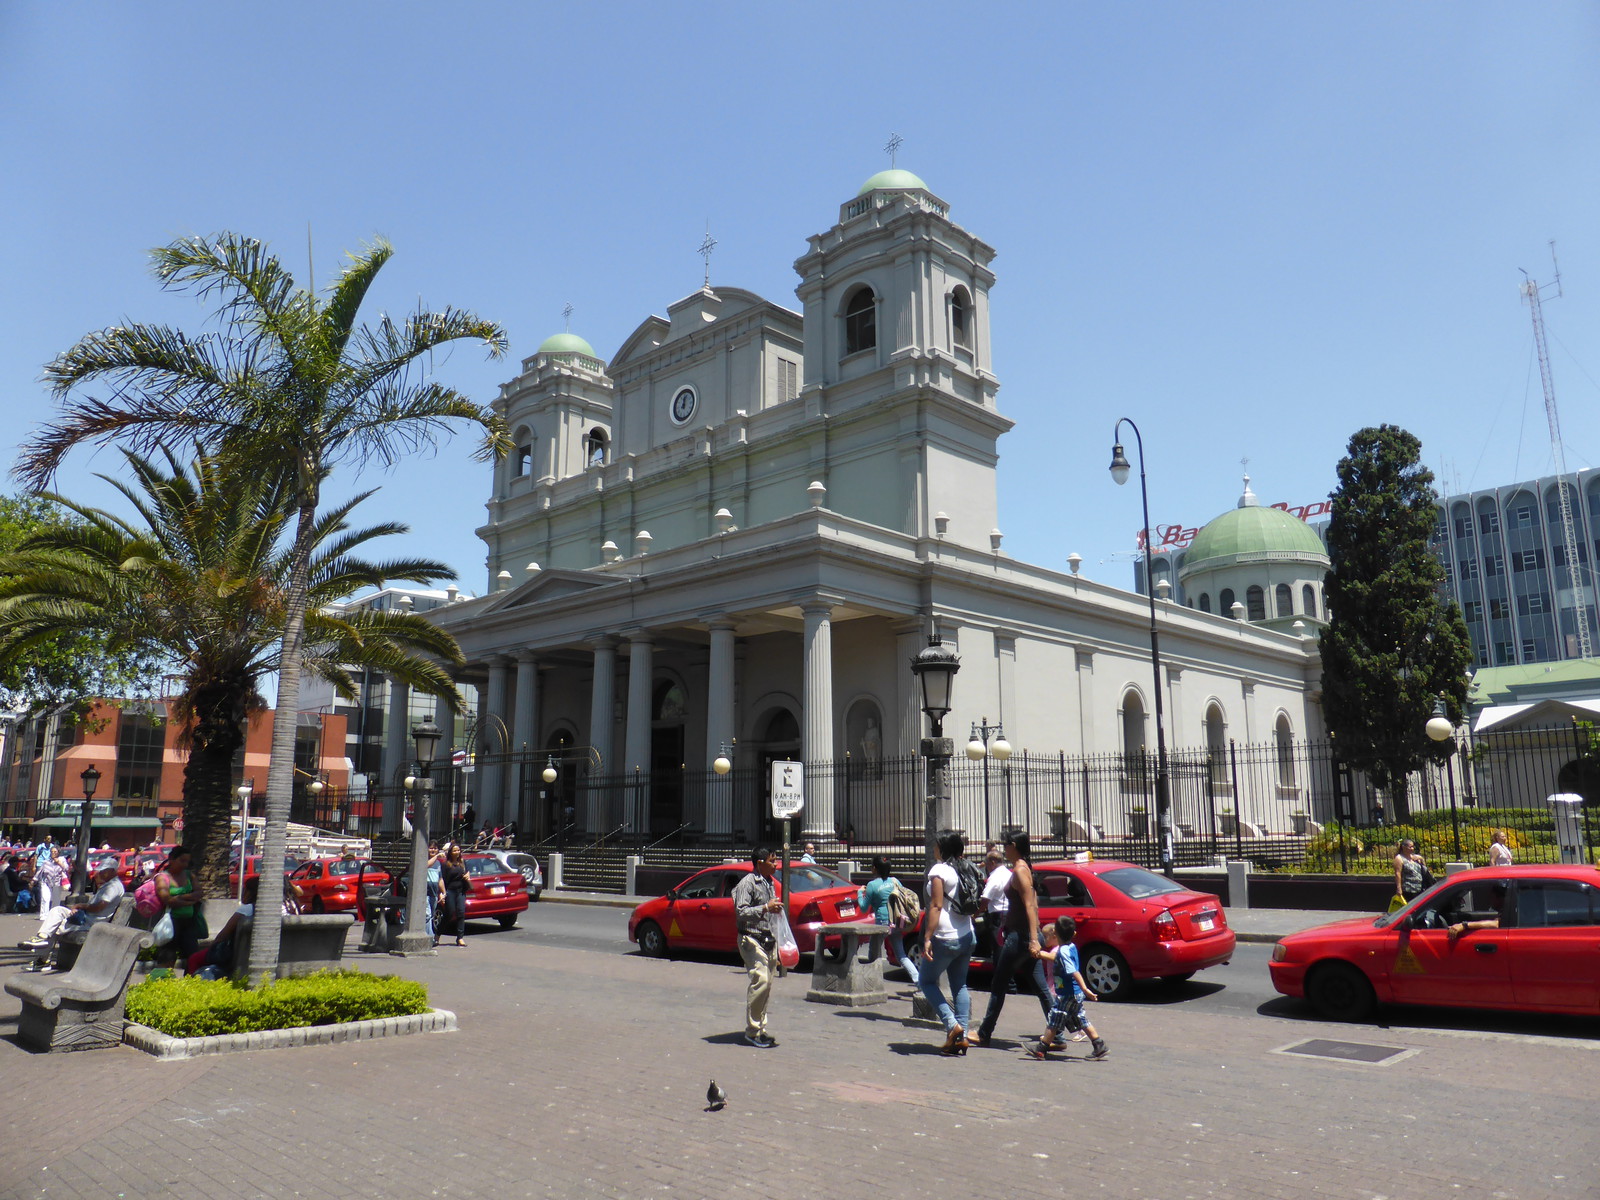 The Catedral Metropolitana